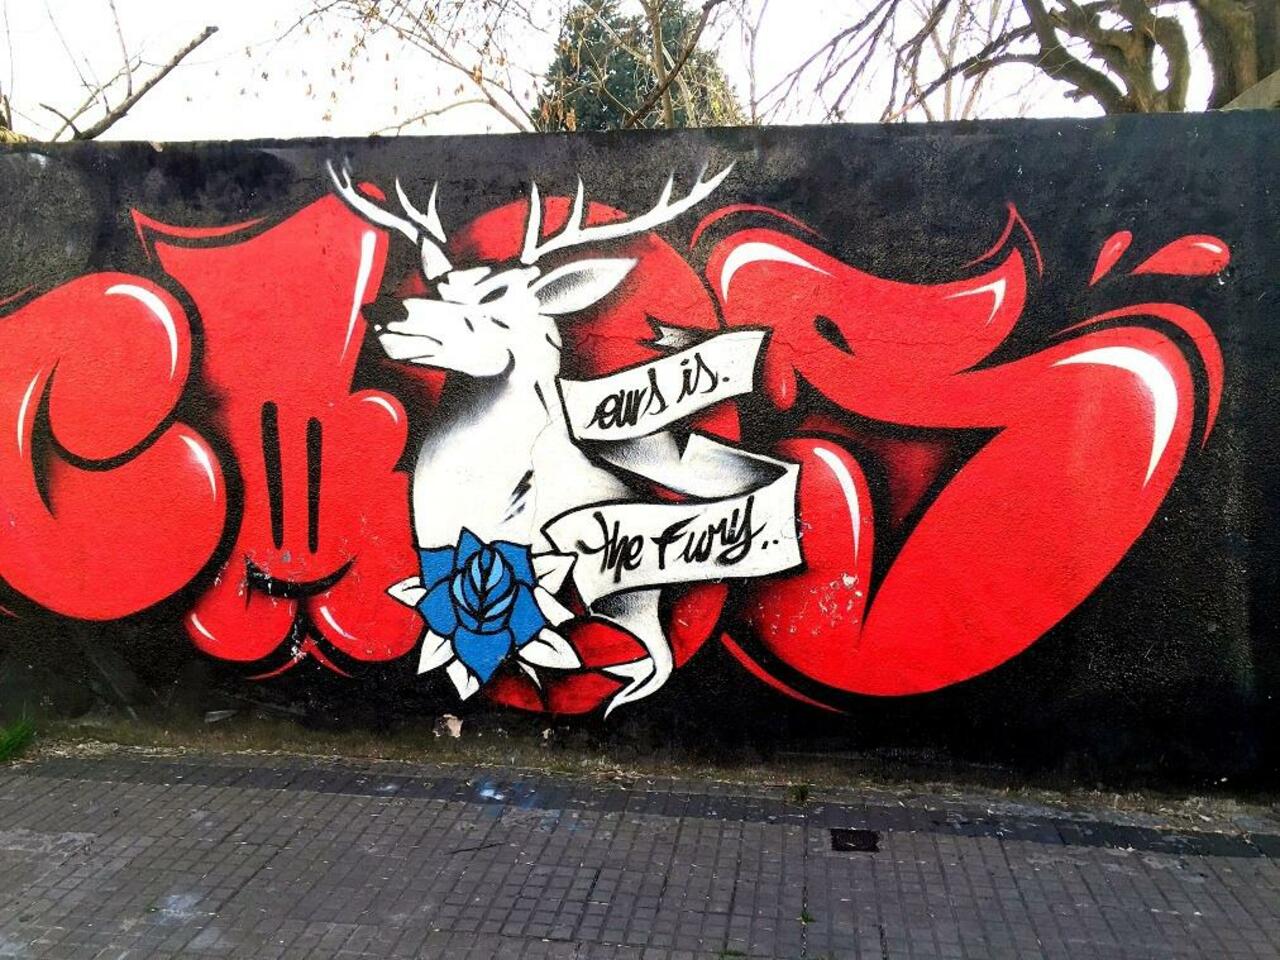 #Graffiti de hoy: < Borges’white hind > calle 9 66y67 #LaPlata #Argentina #StreetArt #UrbanArt #ArteUrbano http://t.co/JMyhldYM2M